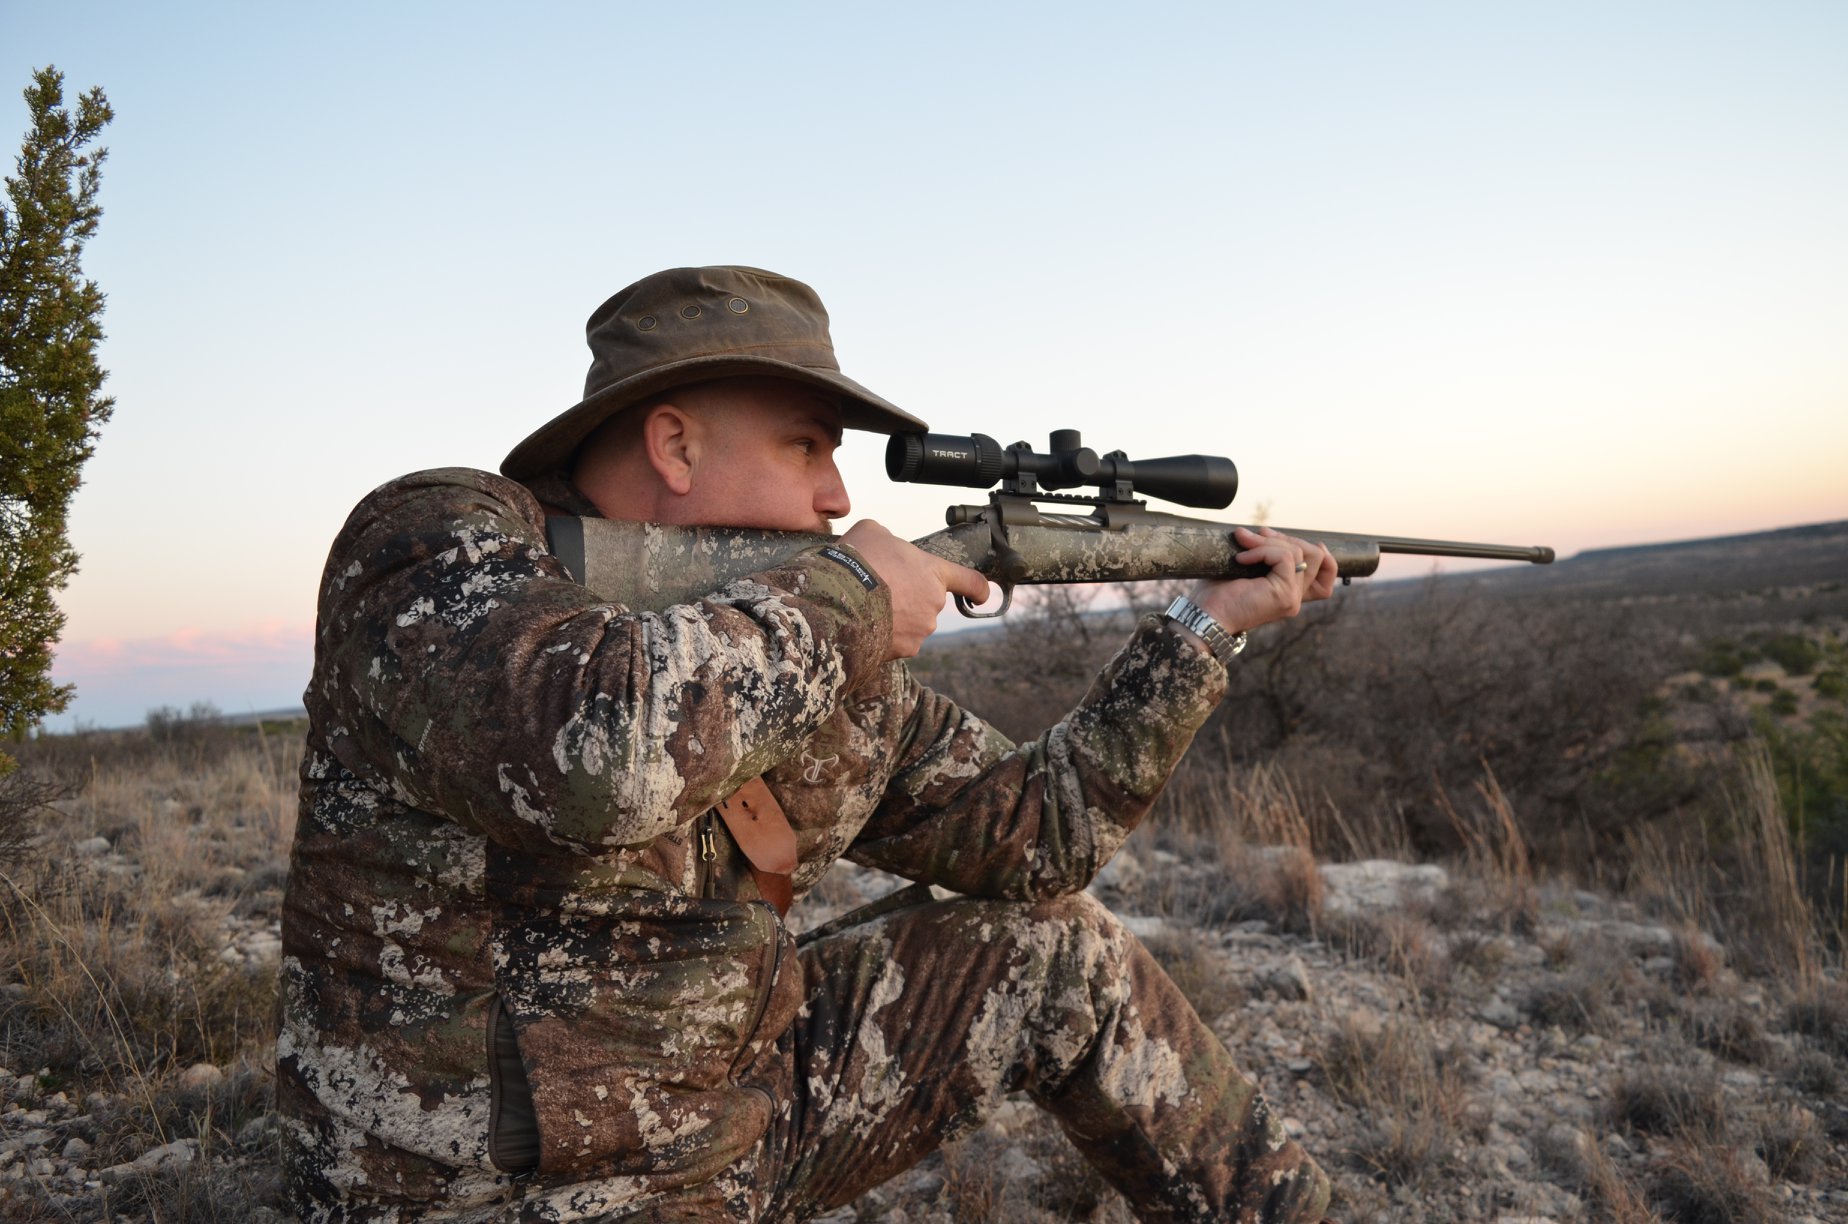 Choosing the Best Rifle Scope for Deer Hunting